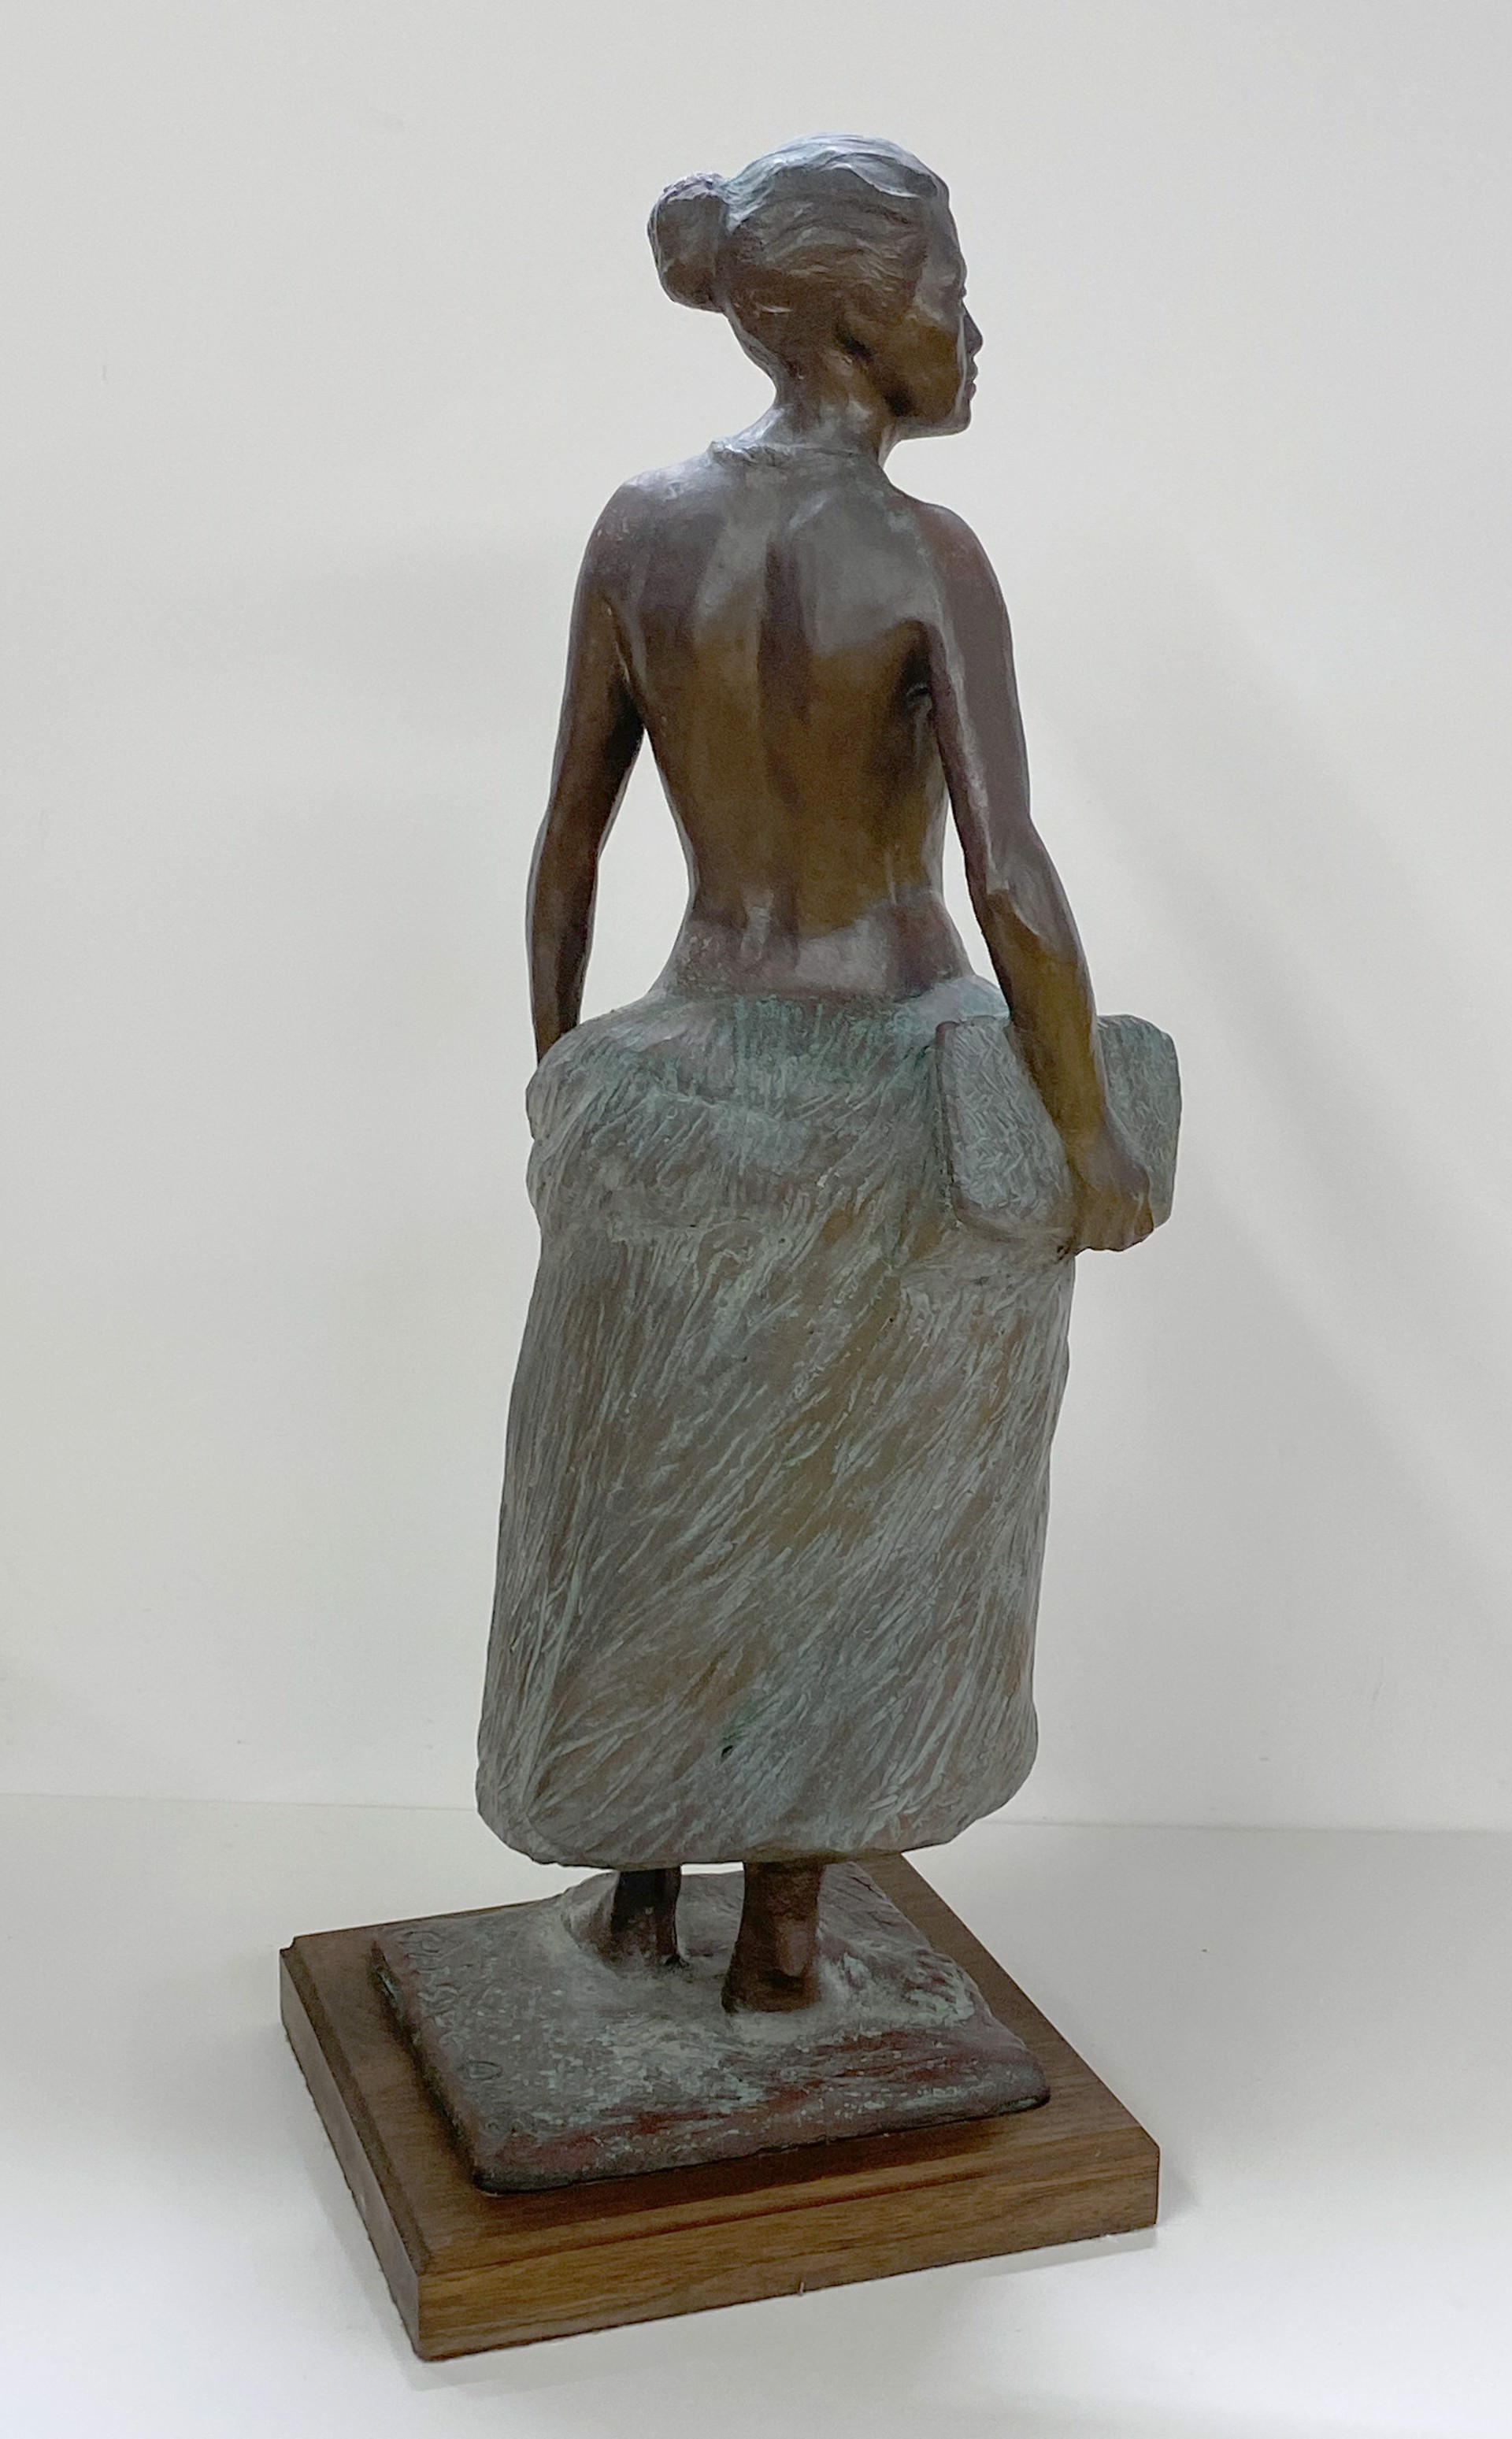 Yapese Woman by A. LaMoyne Garside